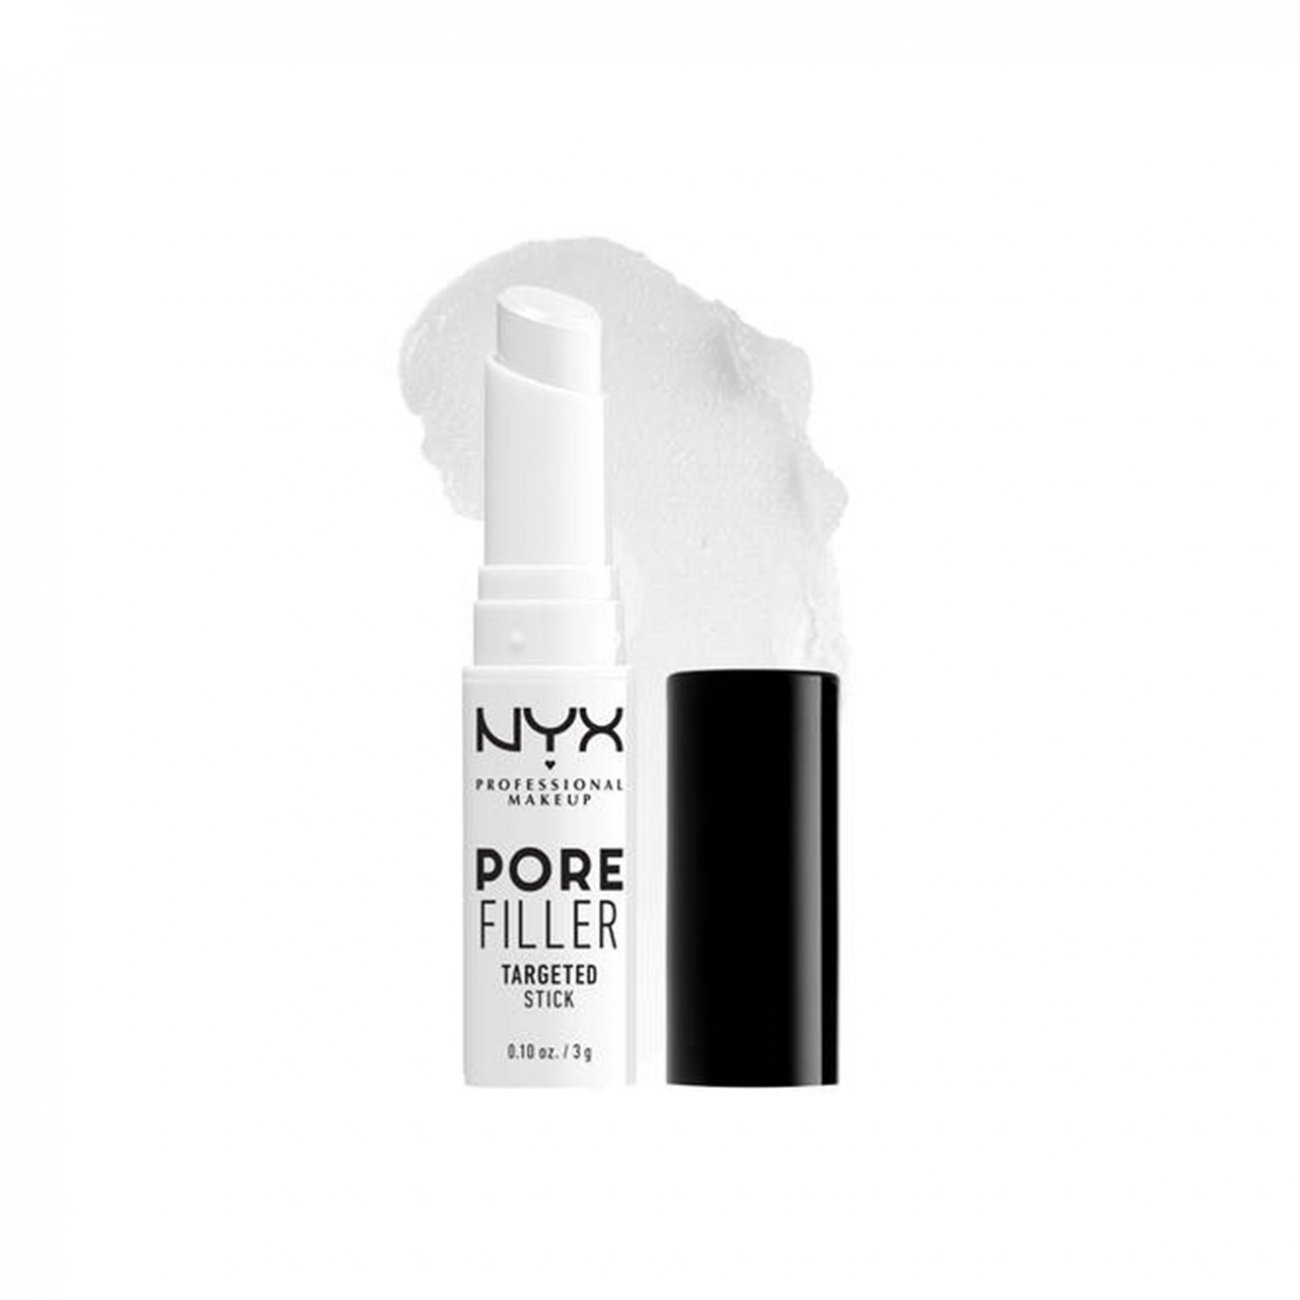 Buy Nyx Pro Makeup Pore Filler Targeted Stick 01 3g · Qatar